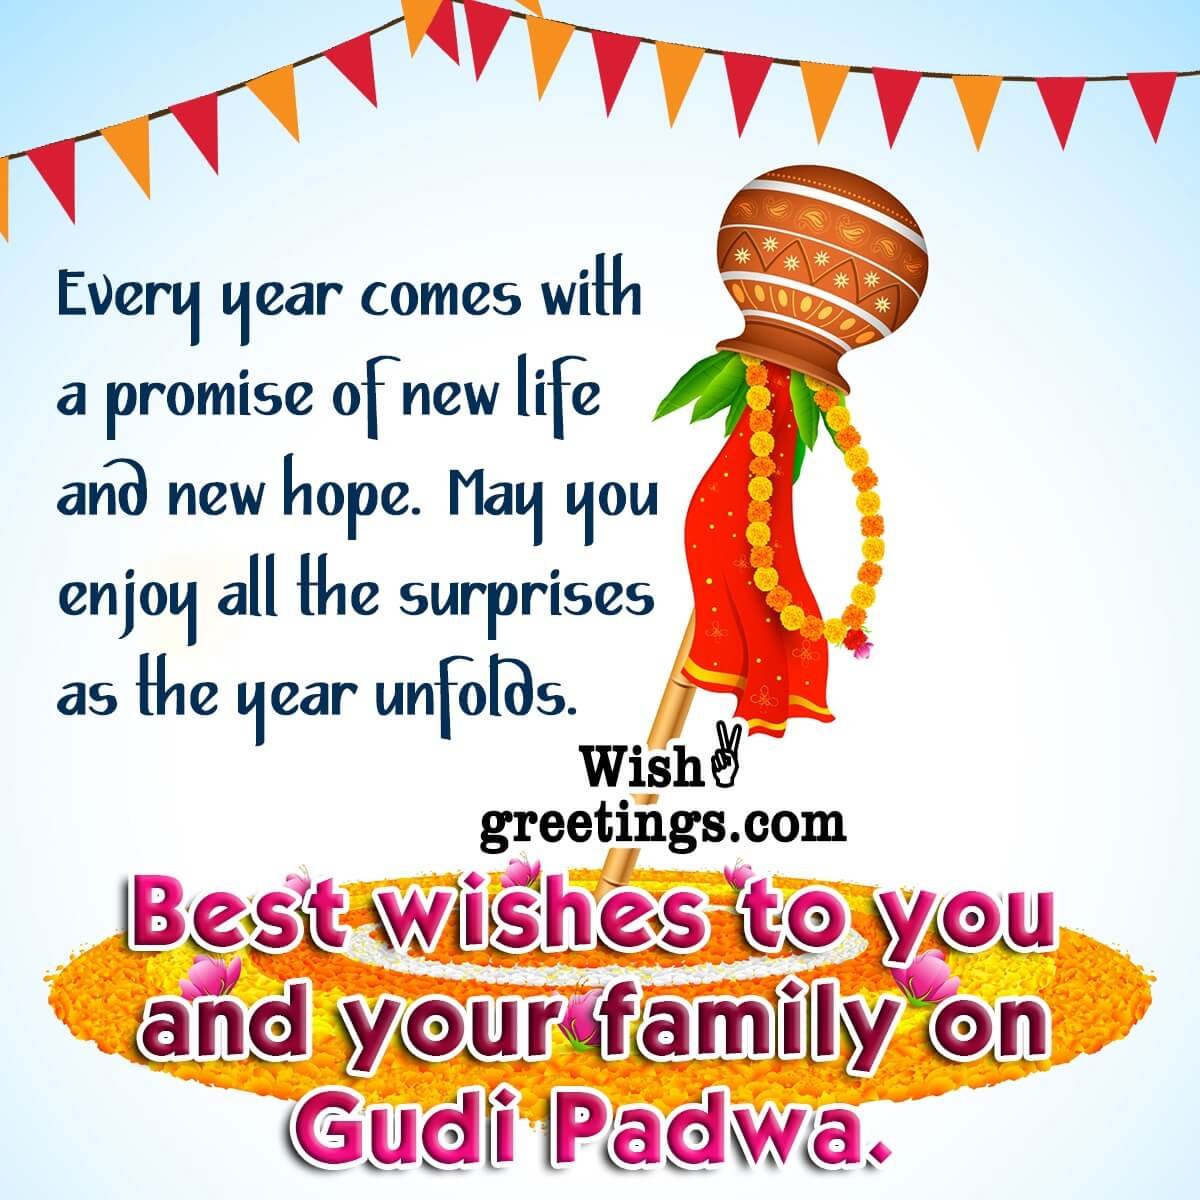 Happy Gudi Padwa Wishes Messages